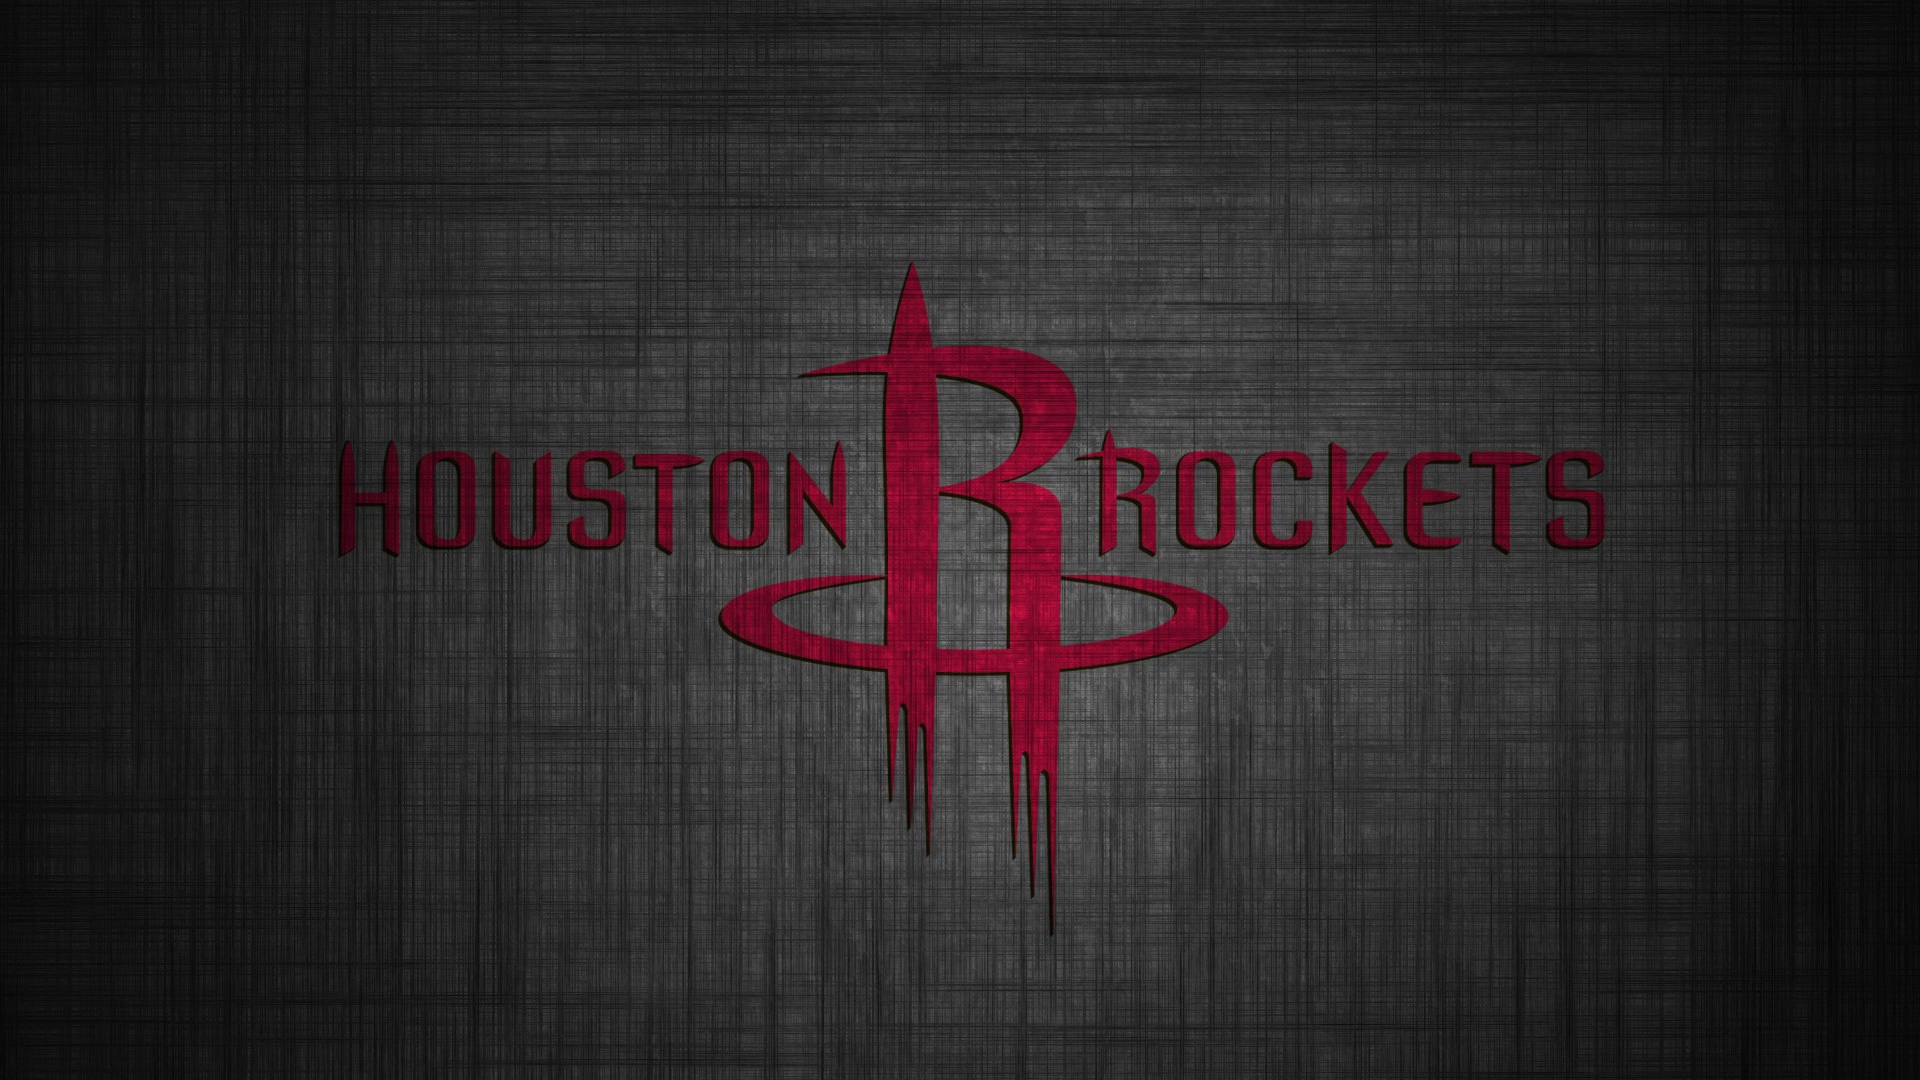 Houston Rockets Logo Wallpaper | PixelsTalk.Net1920 x 1080